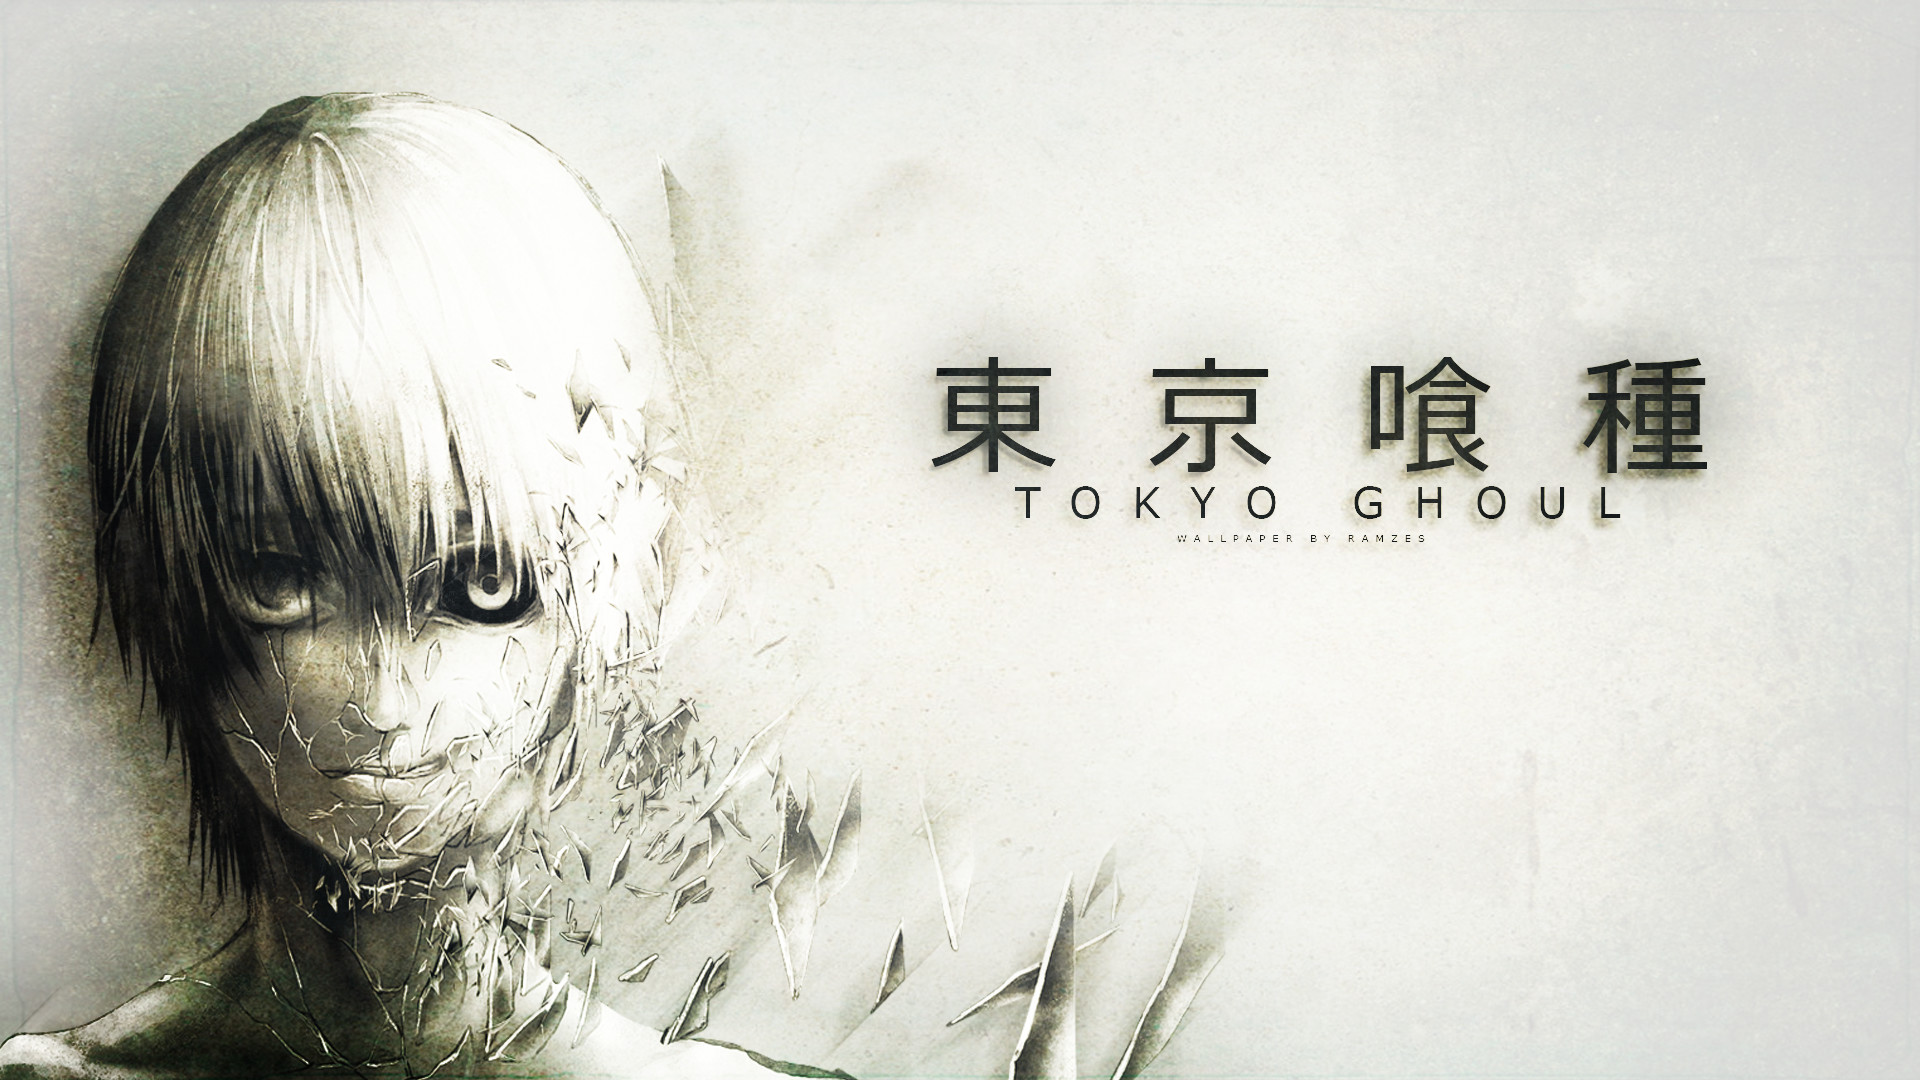 1920x1080 Tokyo Ghoul Wallpaper by Ramzes100 Tokyo Ghoul Wallpaper by Ramzes100